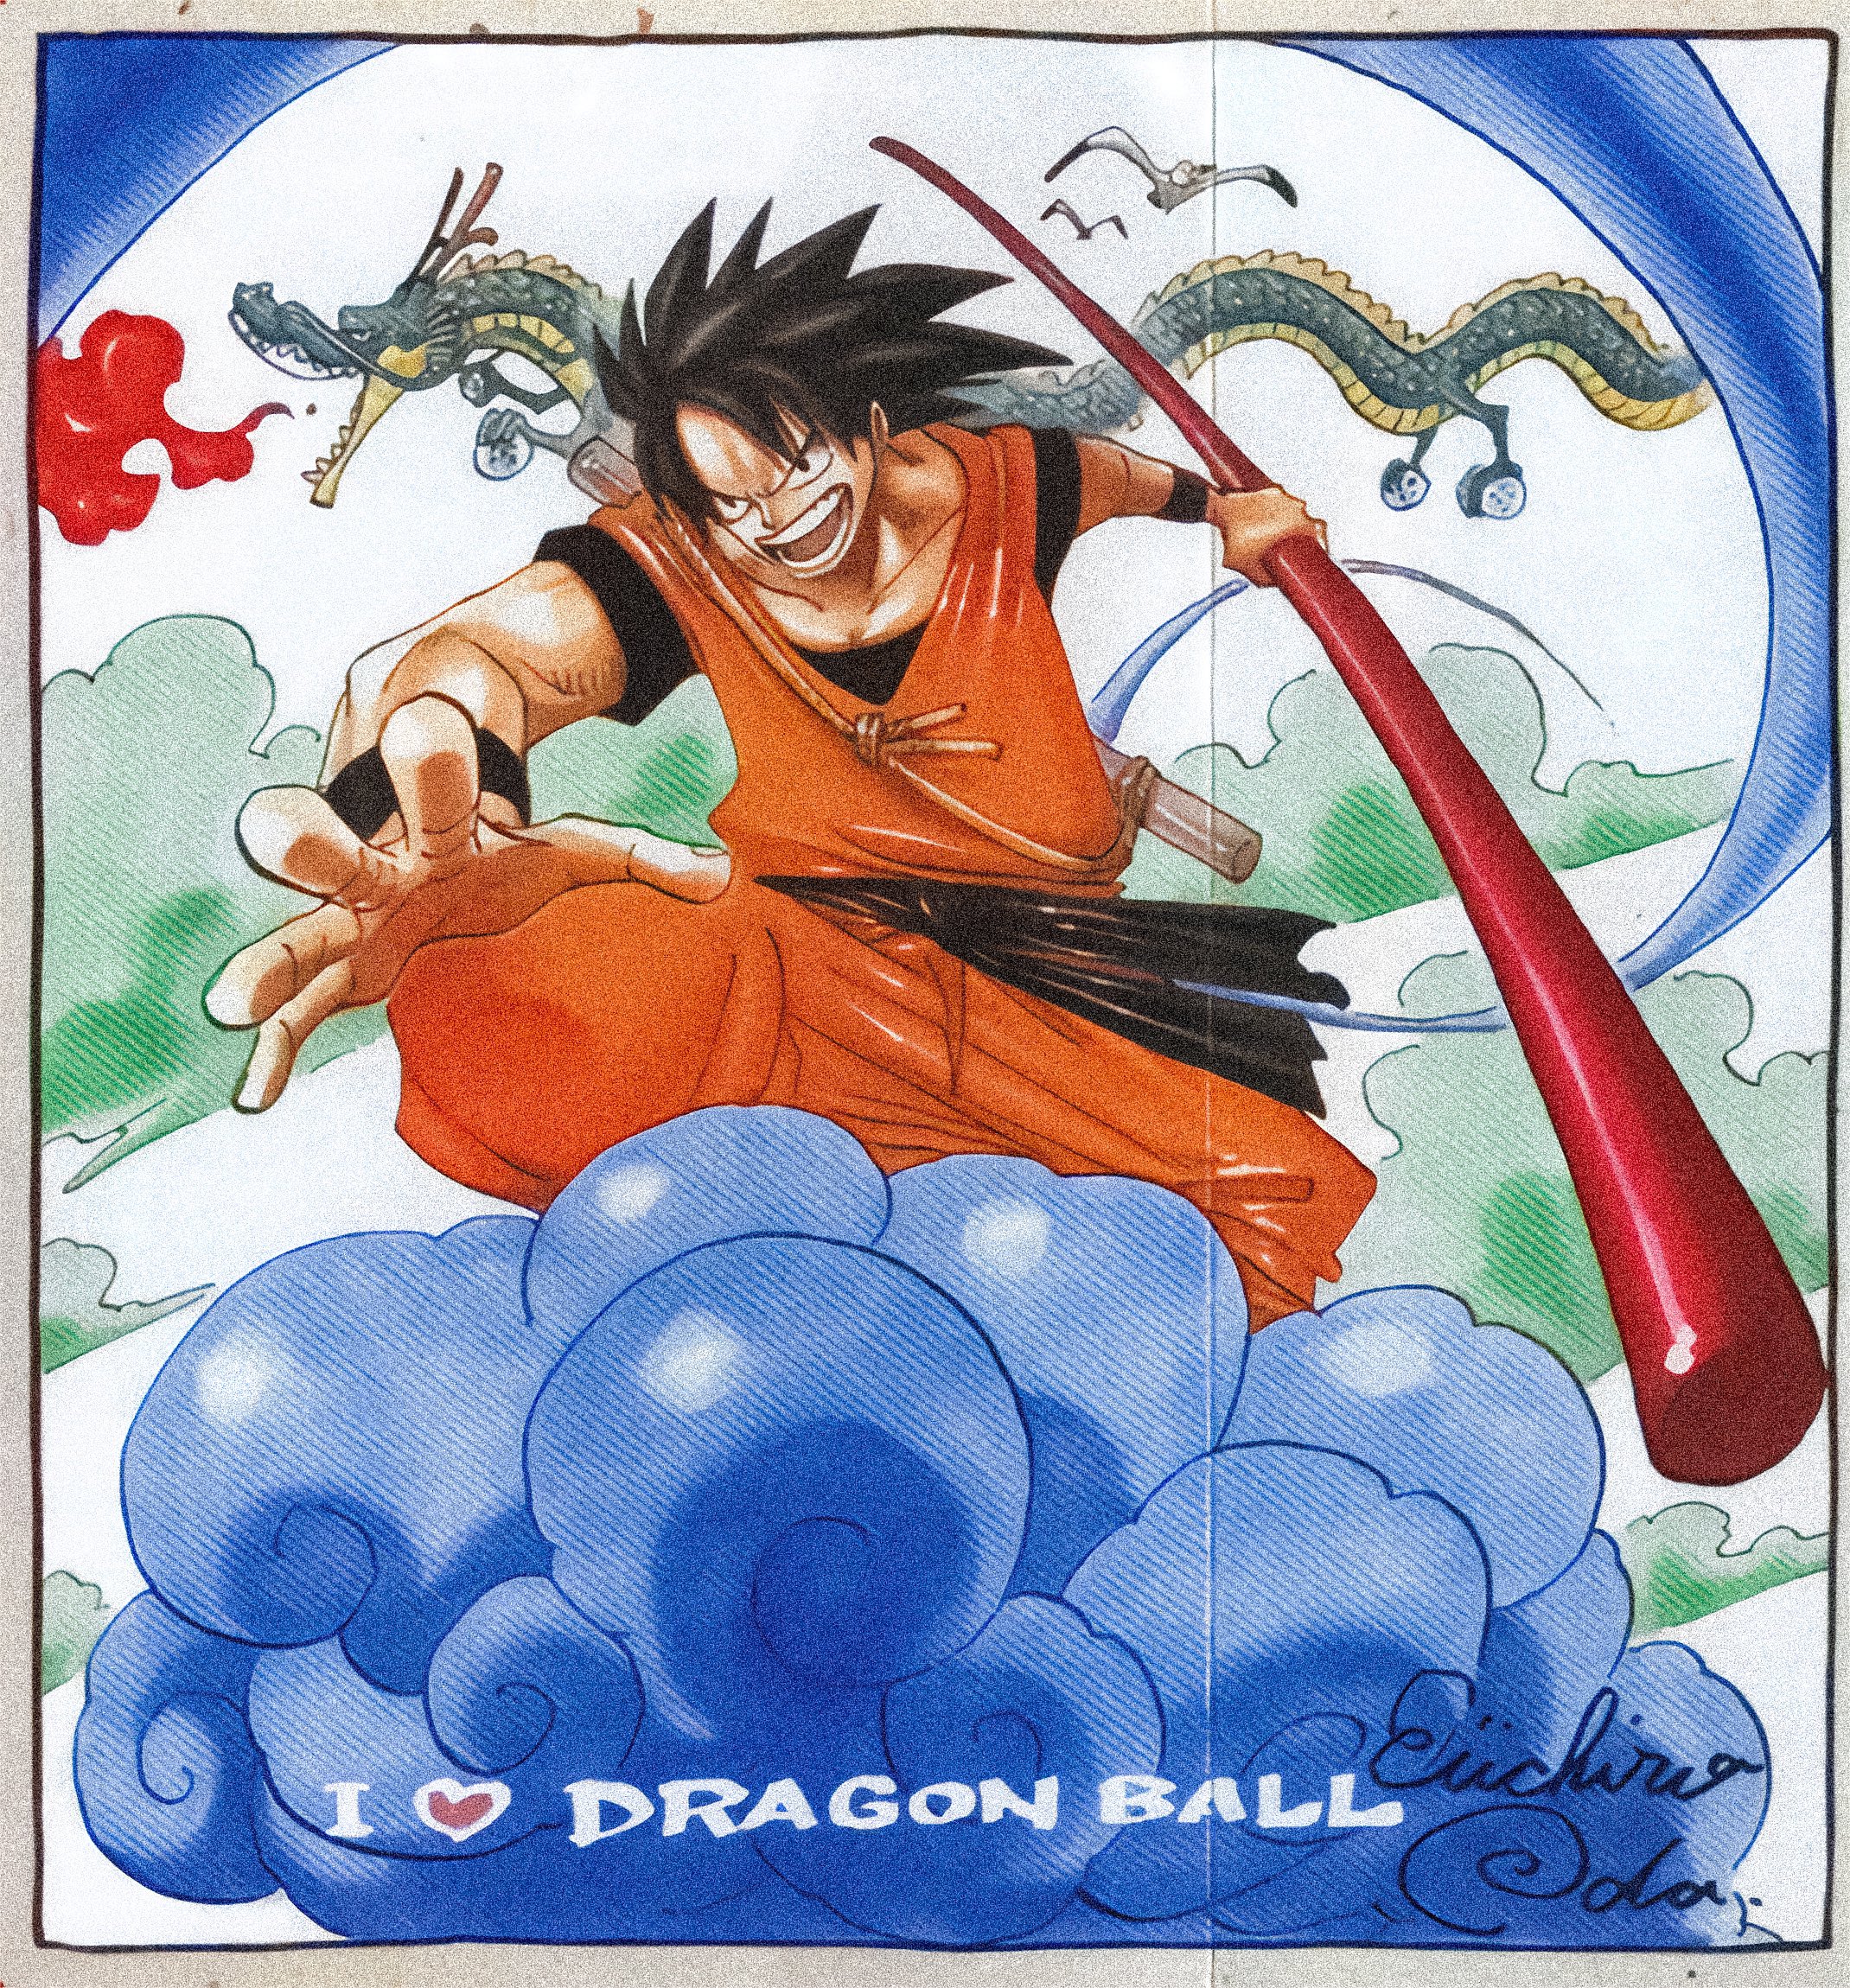 eiichiro oda tributa un disegno a goku e dragon ball di akira toriyama - nerdface